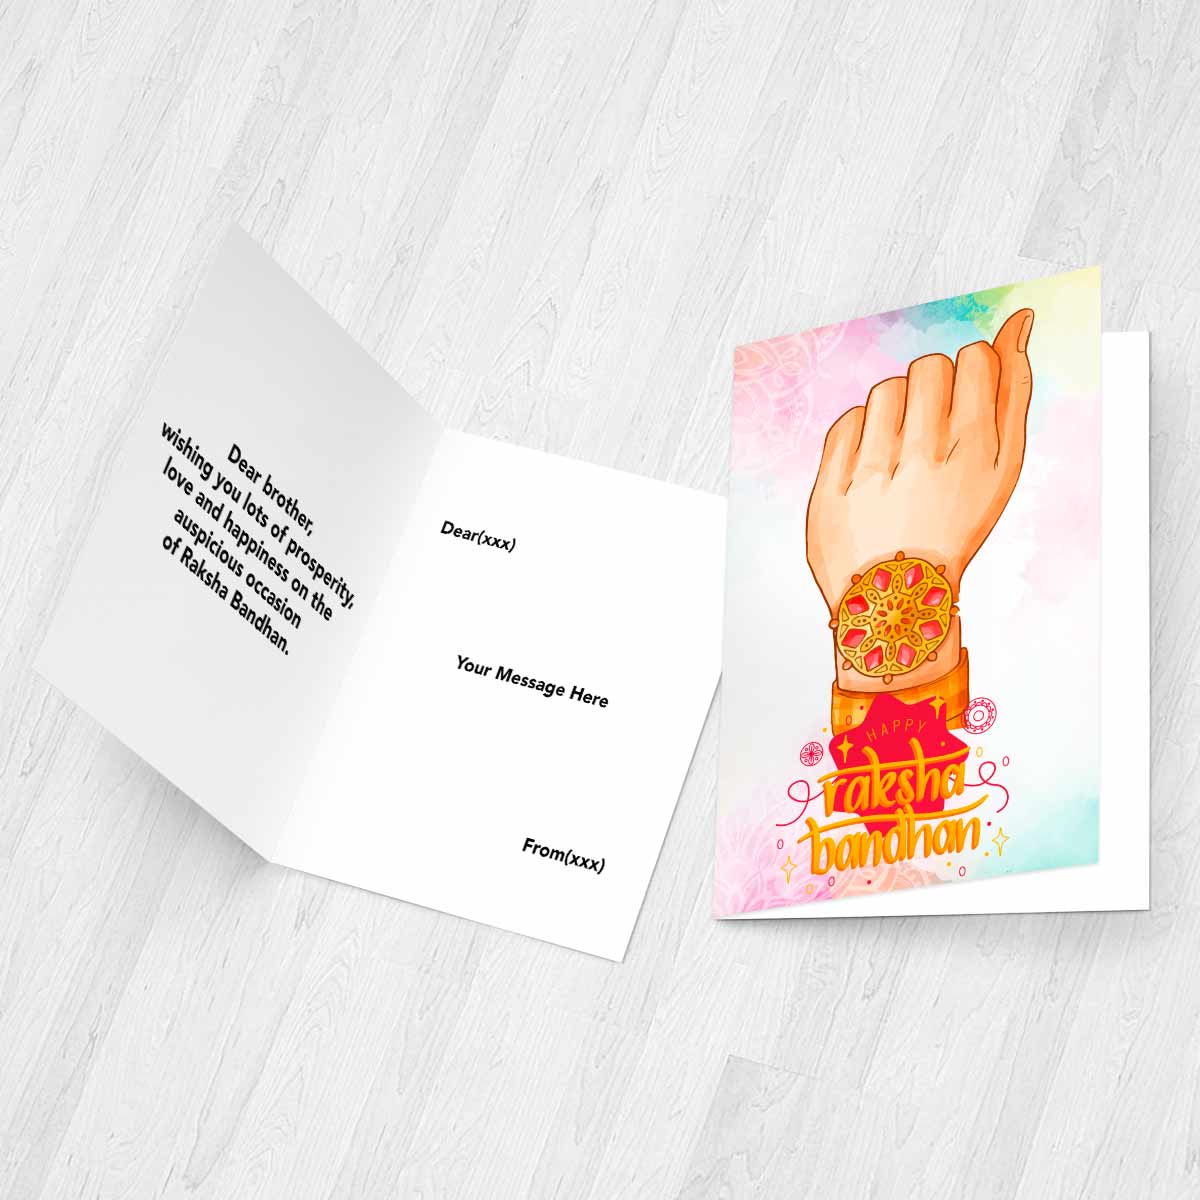 Happy Rakhi Greeting Card